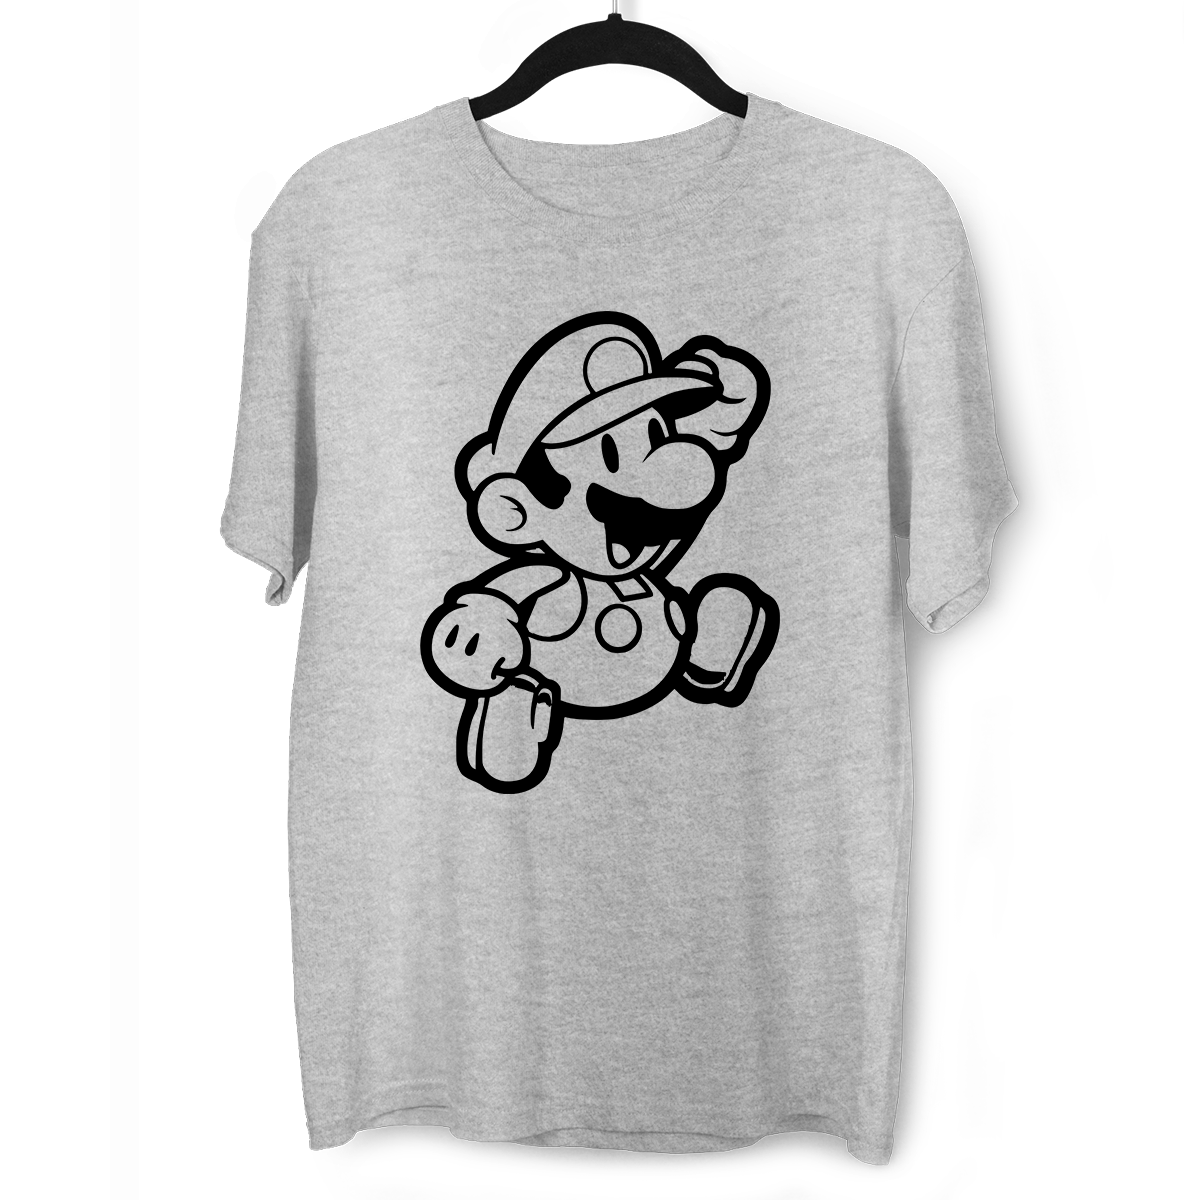 Super Mario Bros Outlined Jumping Mario T-Shirt for all Retro Nintendo Minds - Kuzi Tees